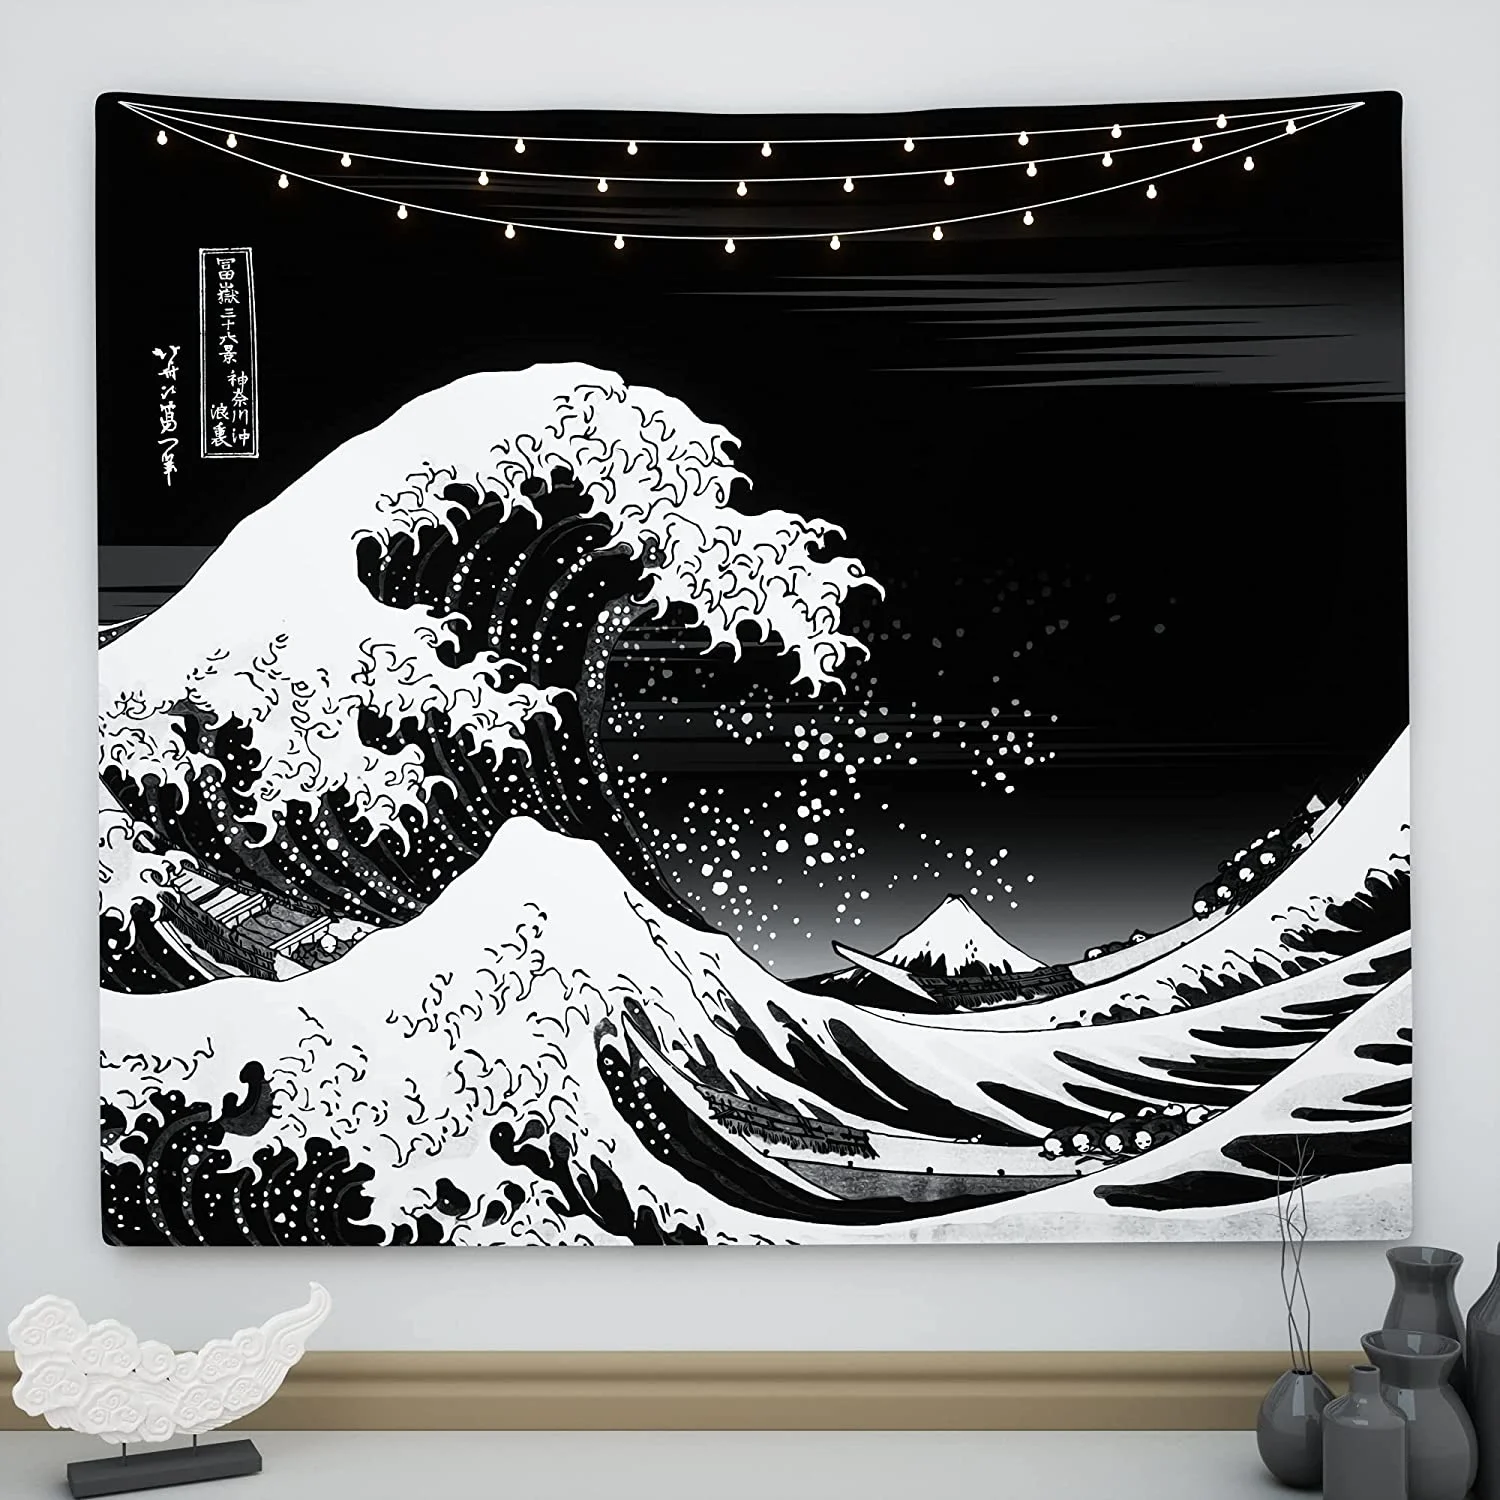 Черно-белый гобелен NEW Wave, настенный гобелен the Great Wave off Kanagawa, японский гобелен Kawaii, Психоделический стиль хиппи